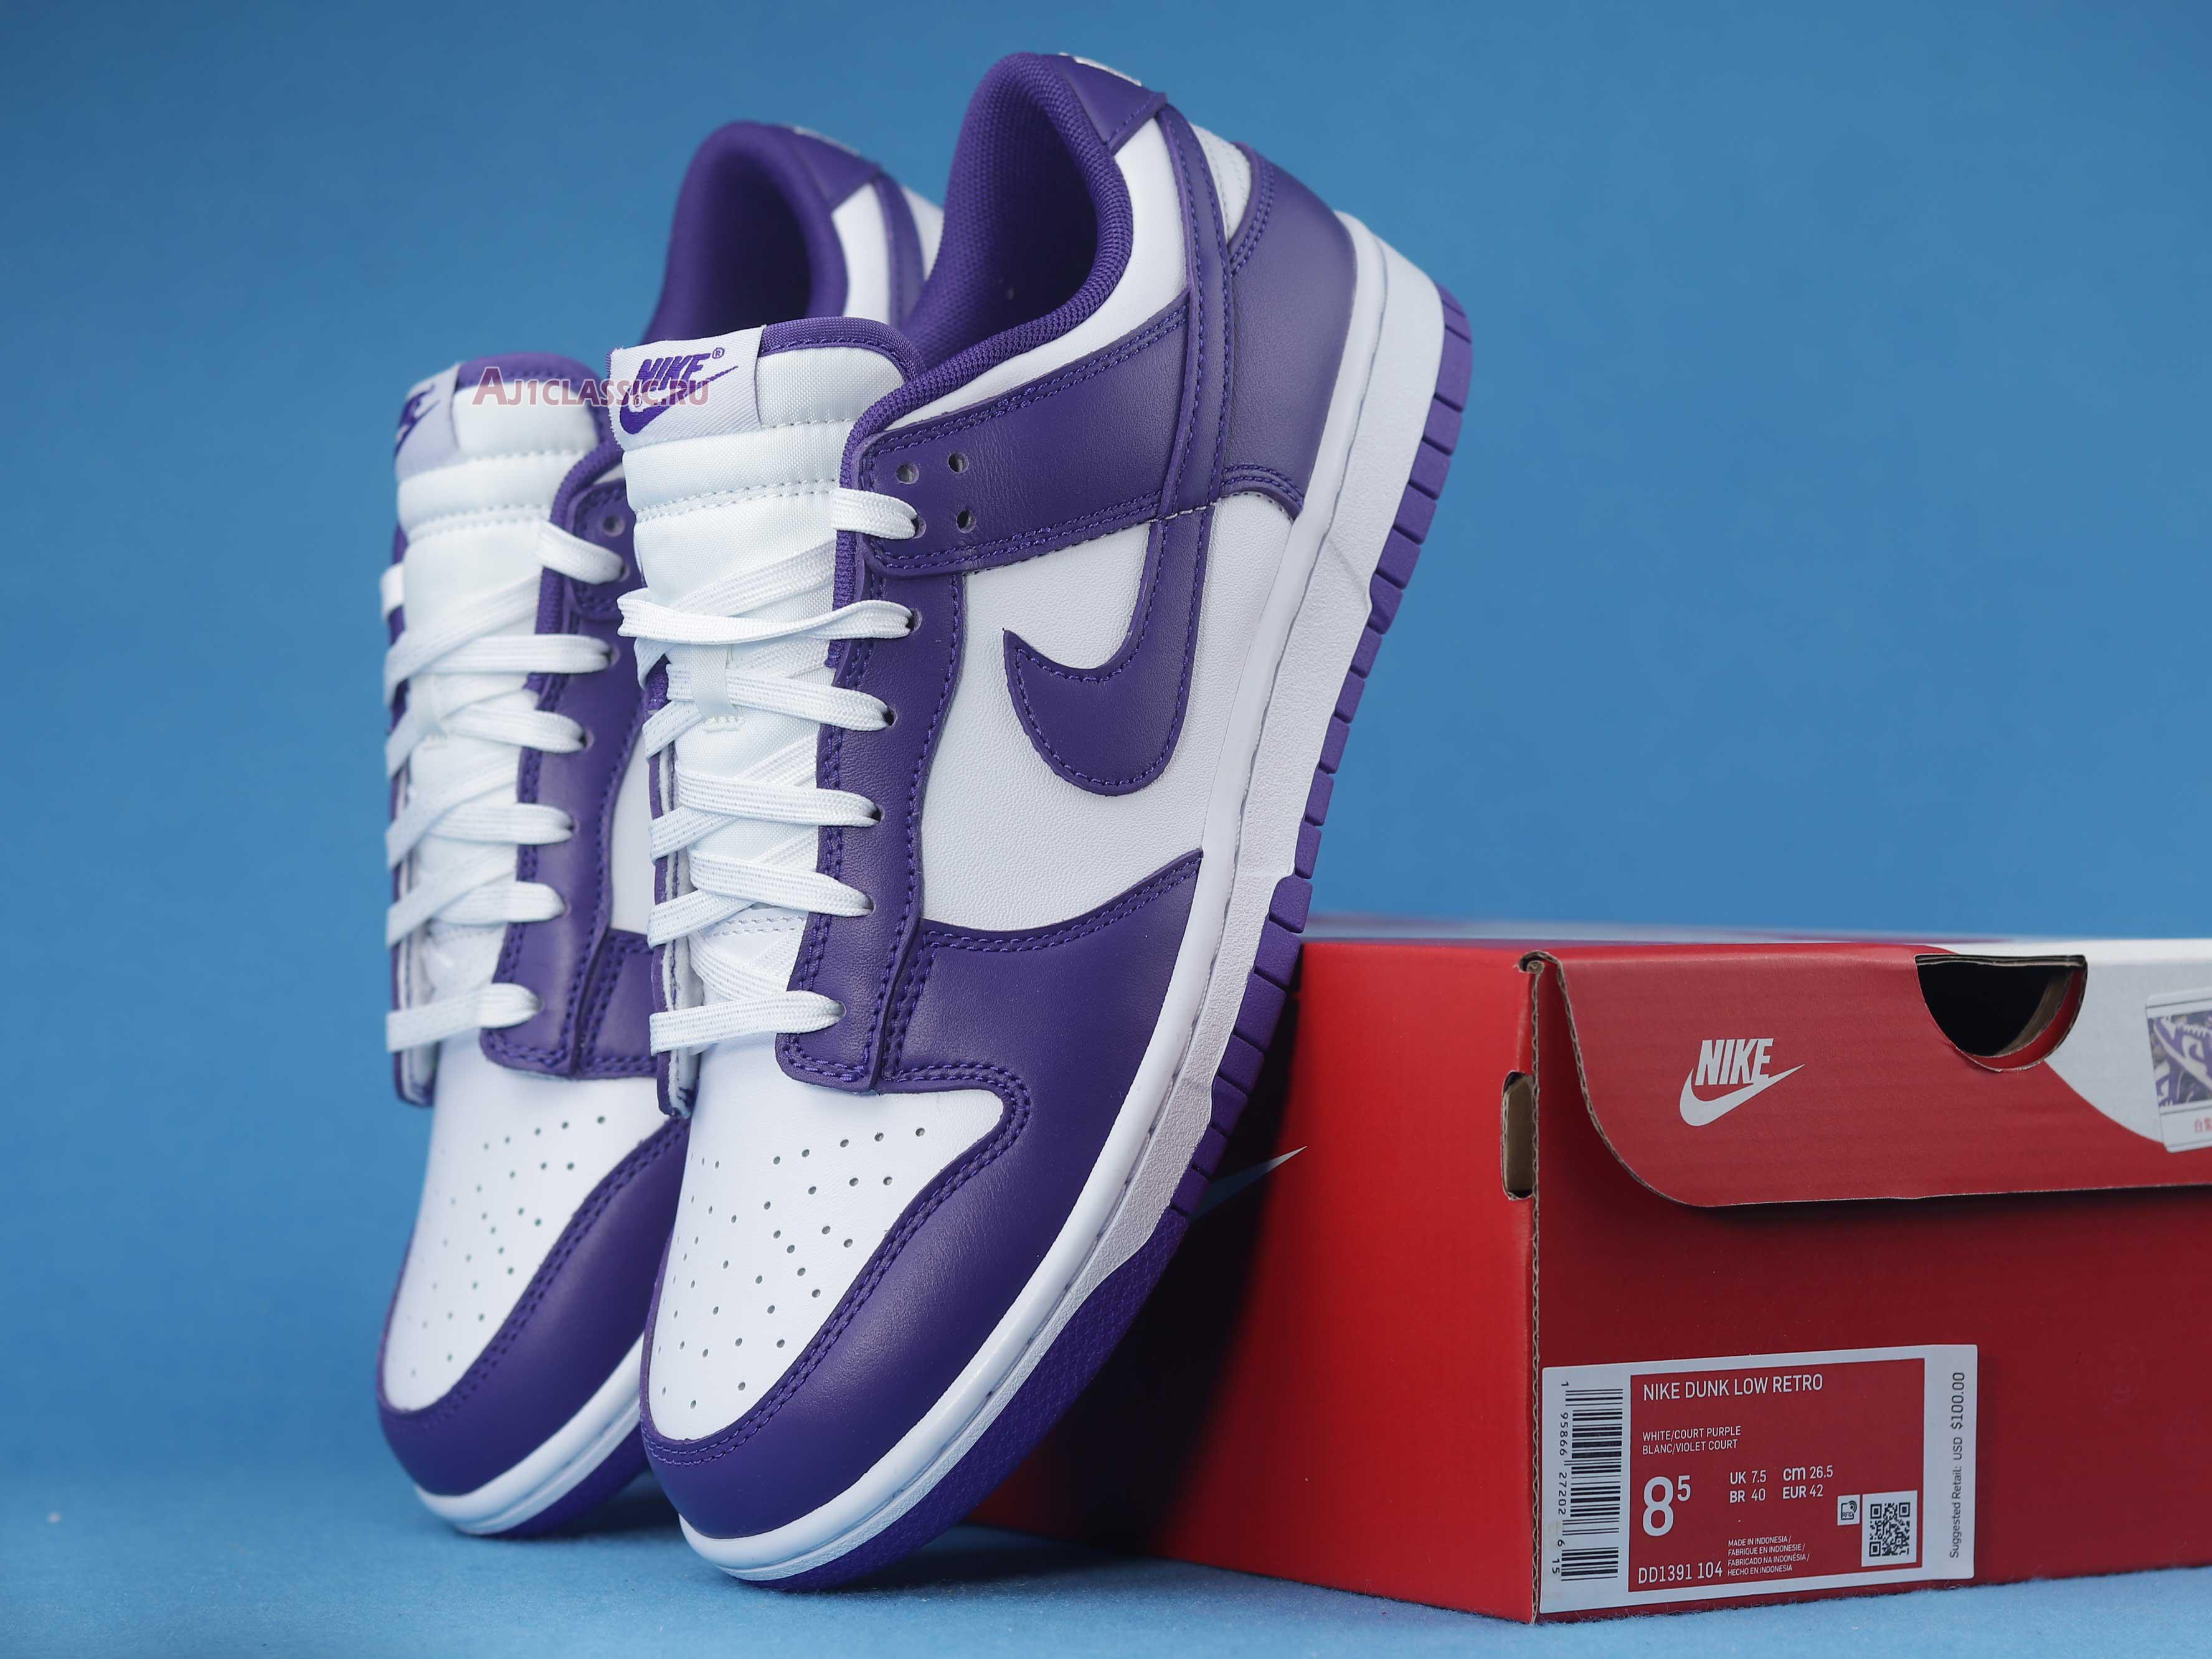 Nike Dunk Low Championship Purple DD1391-104 White/Court Purple Sneakers